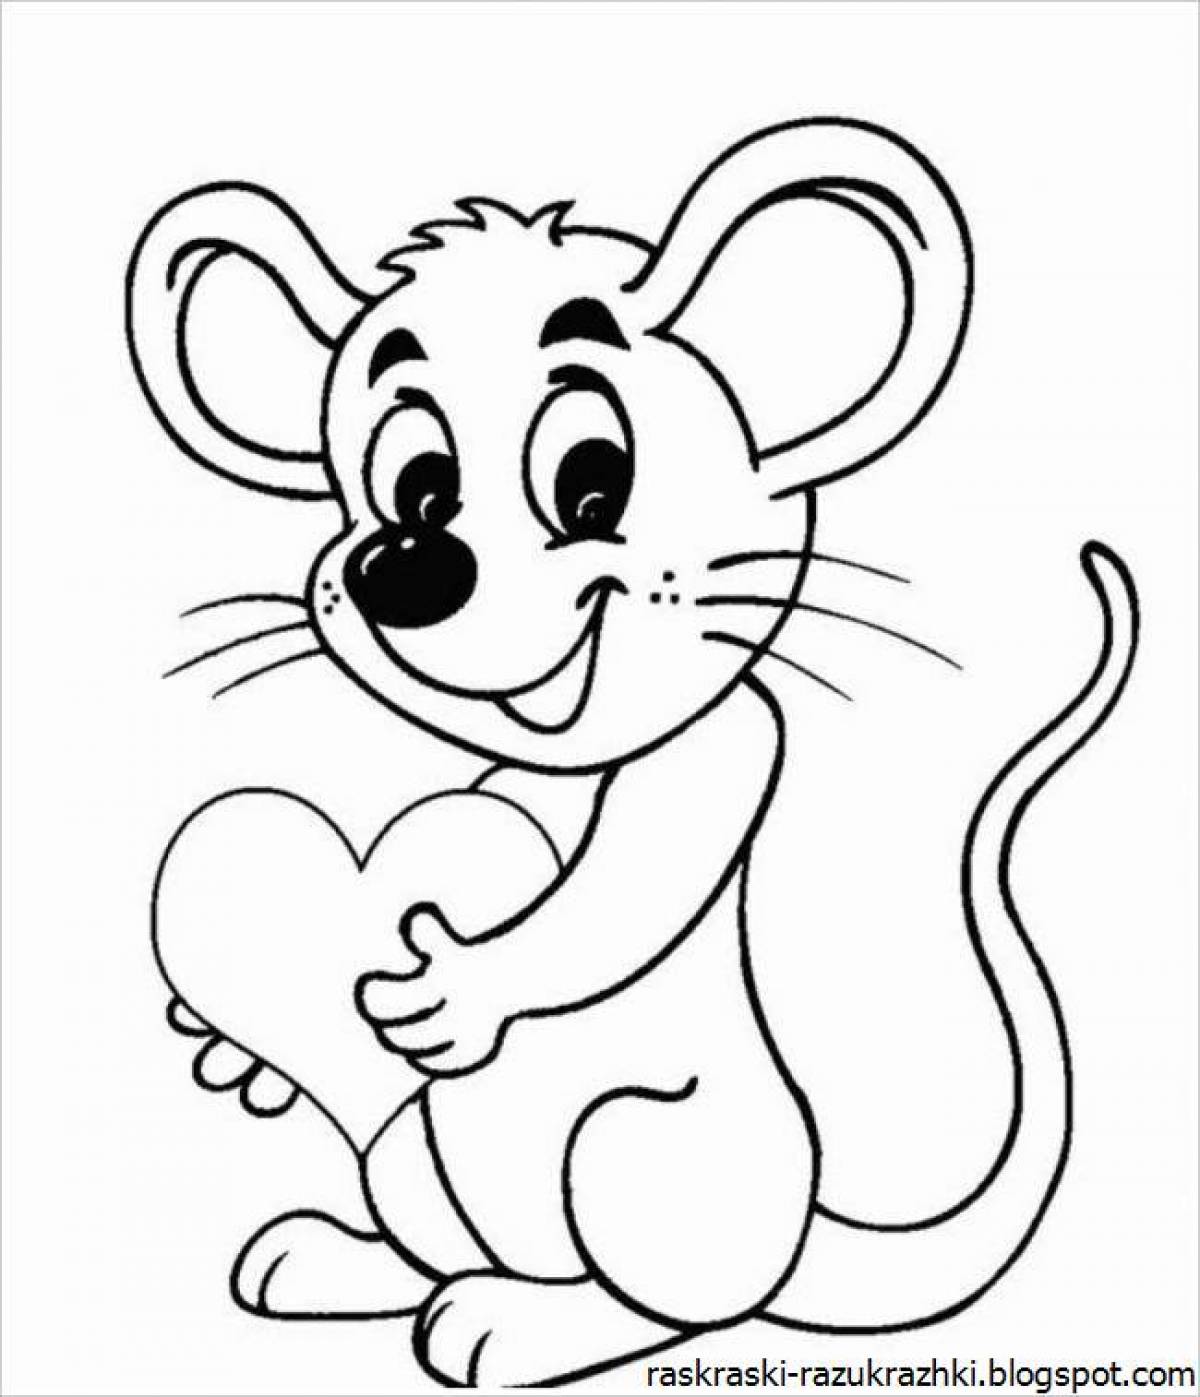 Раскраска радостный мышонок